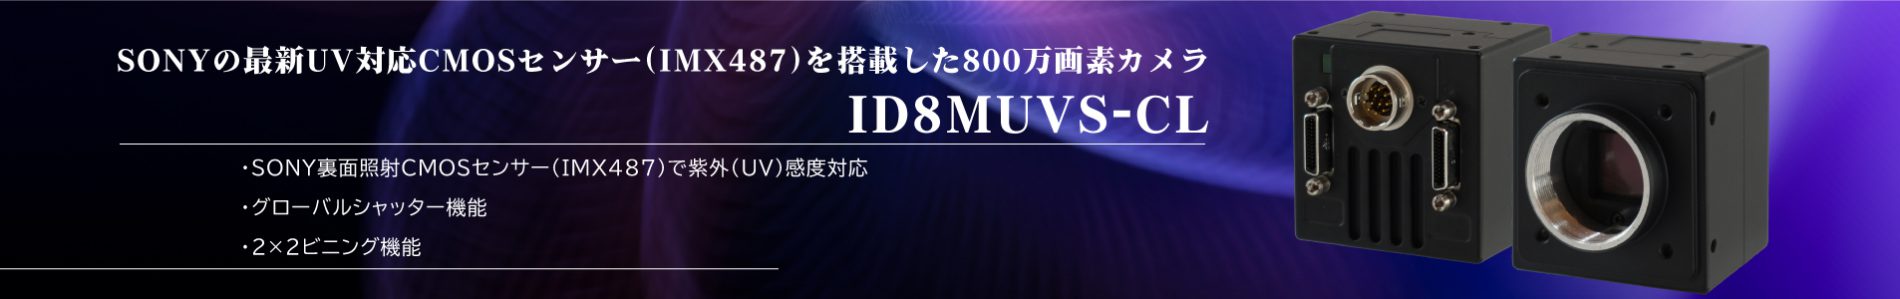 ID8MUVS-CL